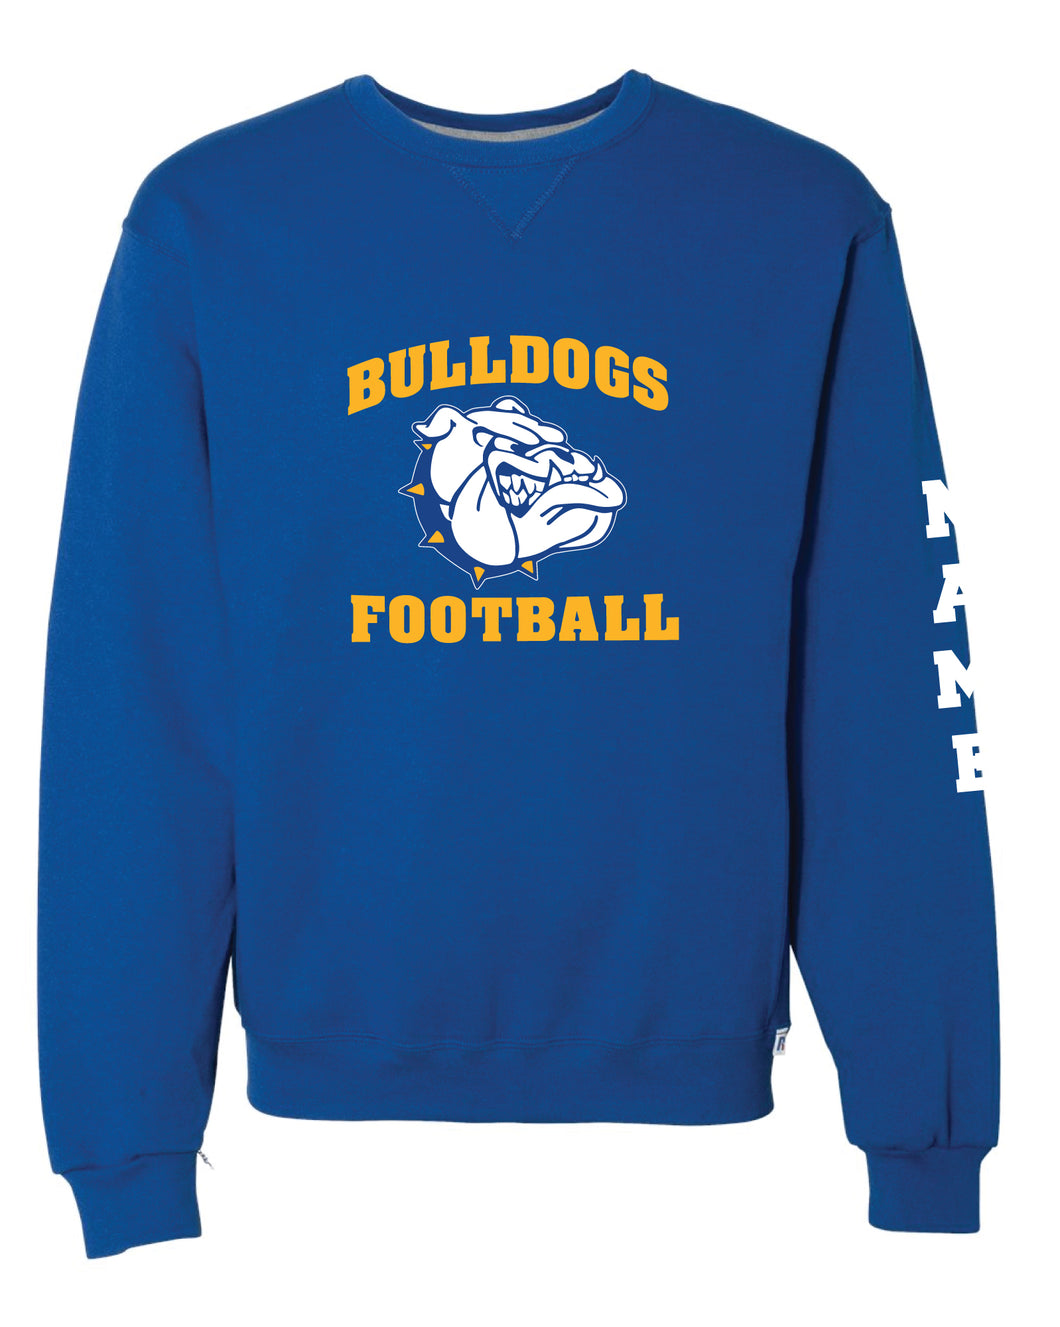 BBYC Bulldogs Football Russell Athletic Cotton Crewneck Sweatshirt - Royal Blue